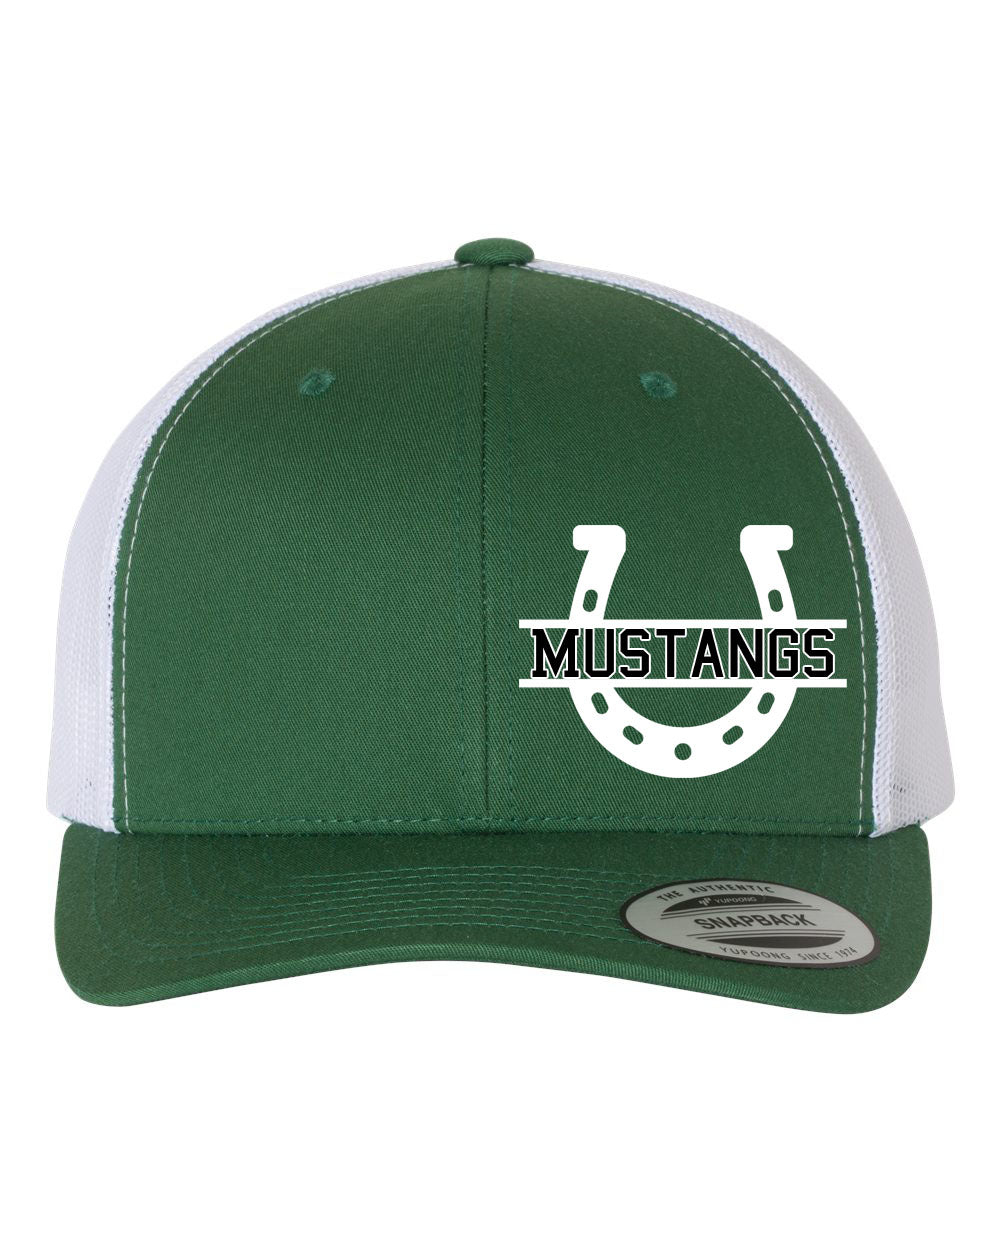 Green Hills Design 12 Trucker Hat